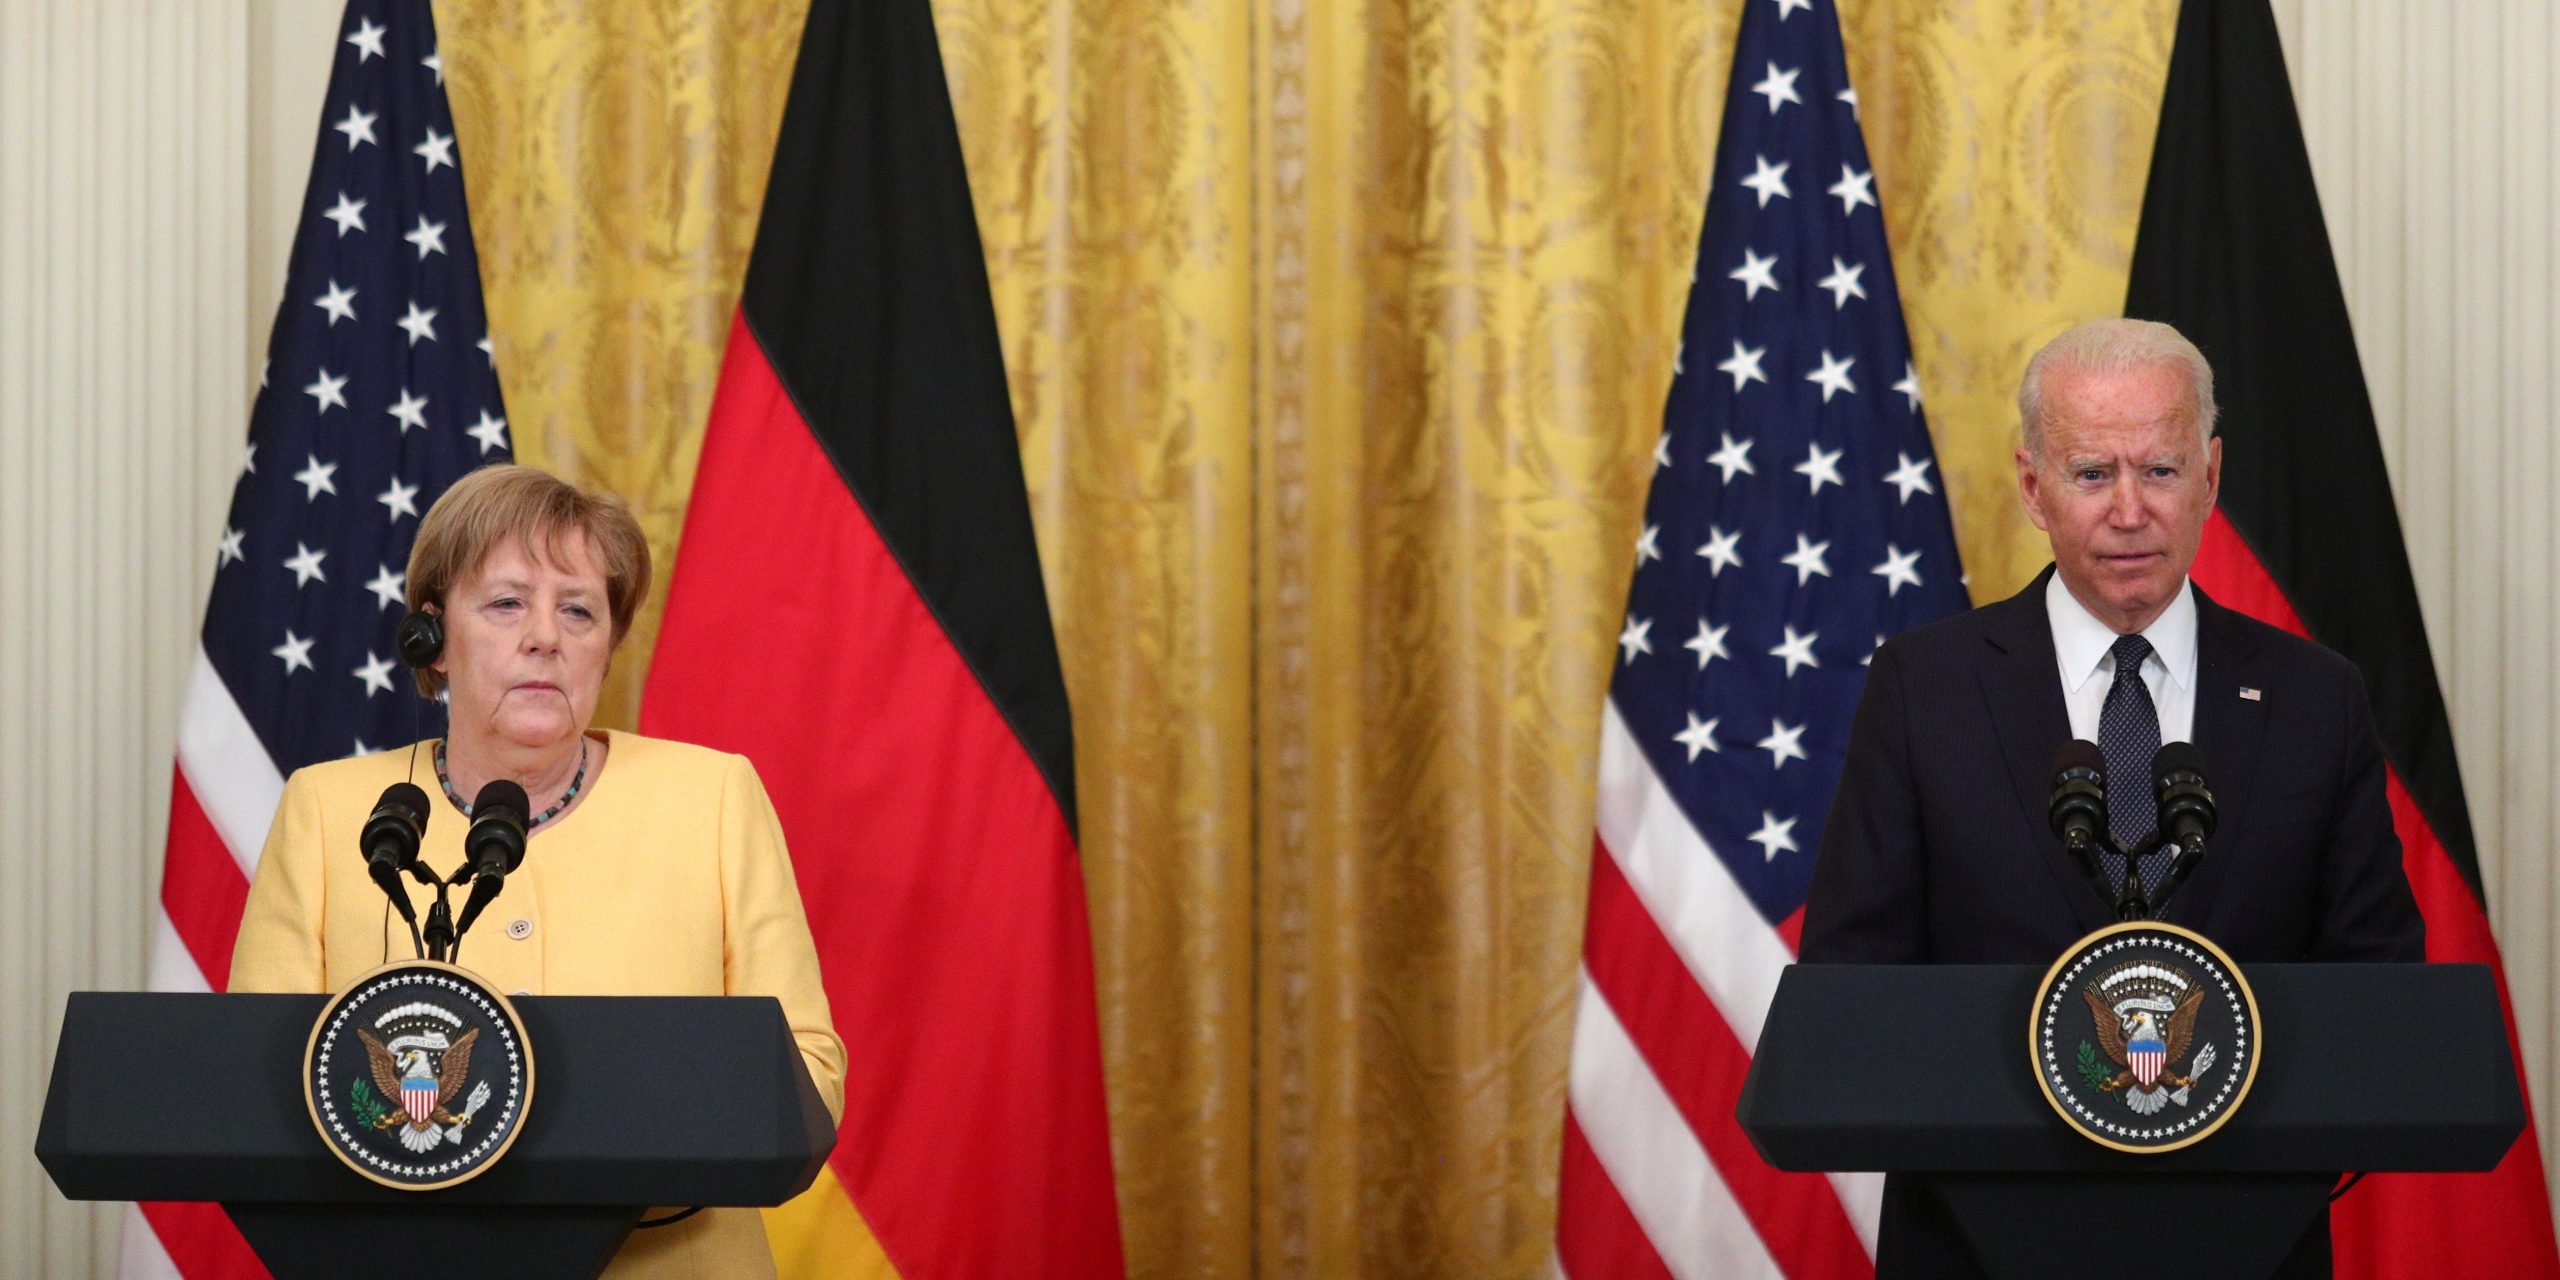 President Biden and German Chancellor Angela Merkel